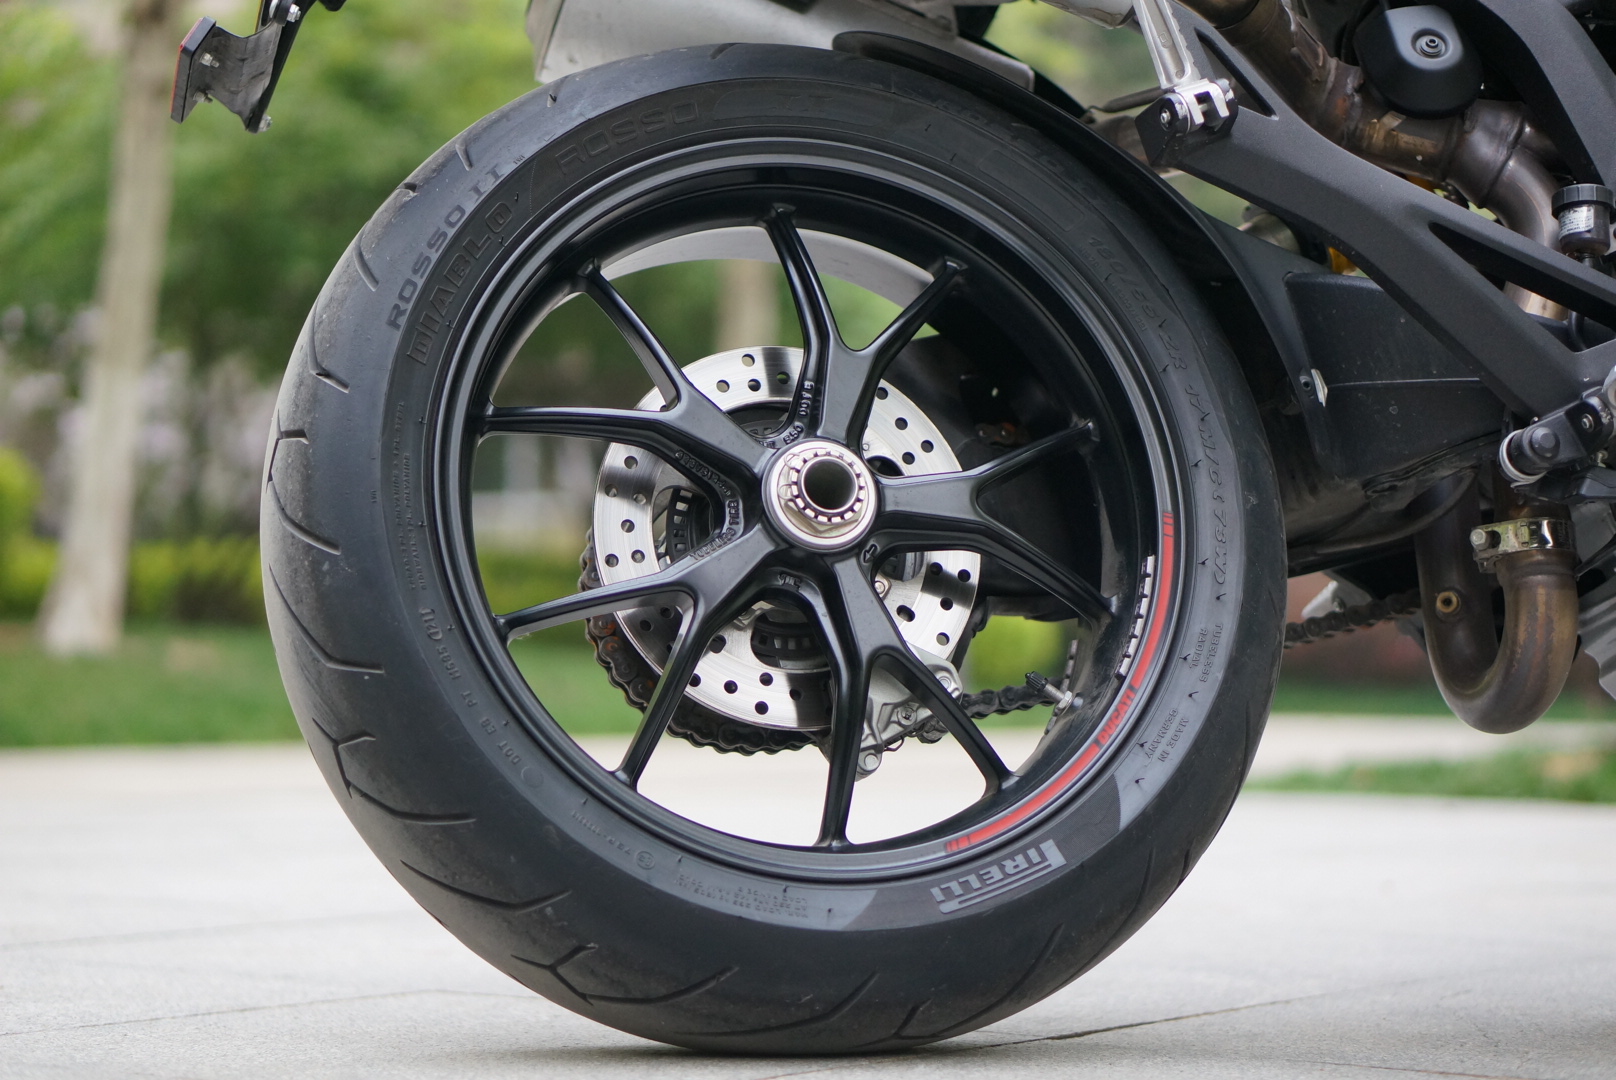 Ducati Ducati Monster 796 Vehicle Tires Motorcycle 1616x1080